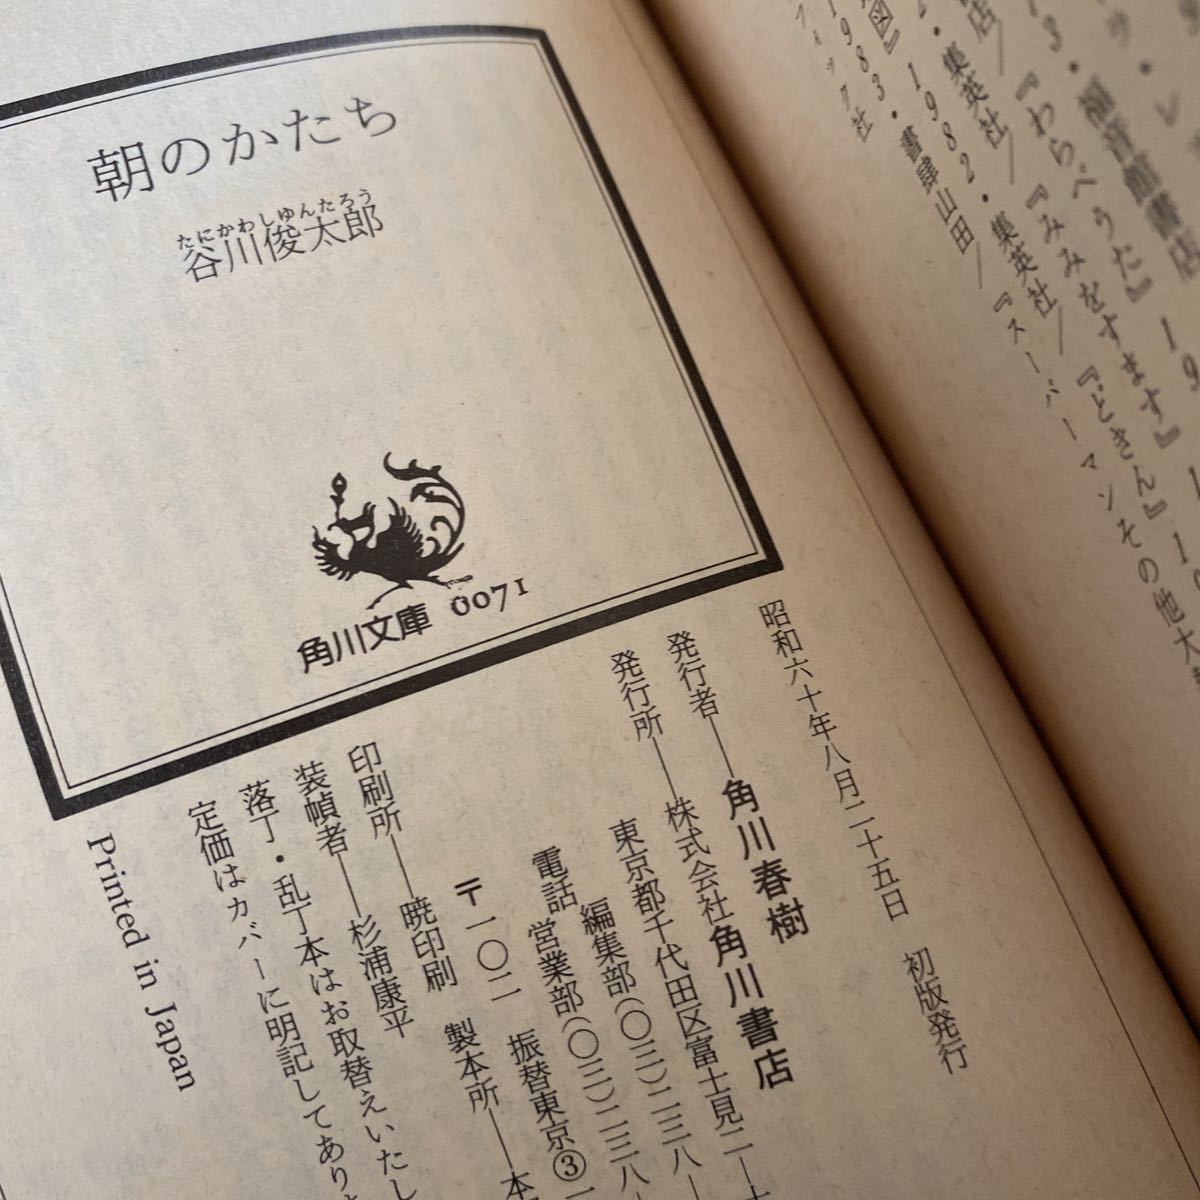 [ утро. ... Tanikawa Shuntaro поэзия сборник 2] Kadokawa Bunko первая версия 